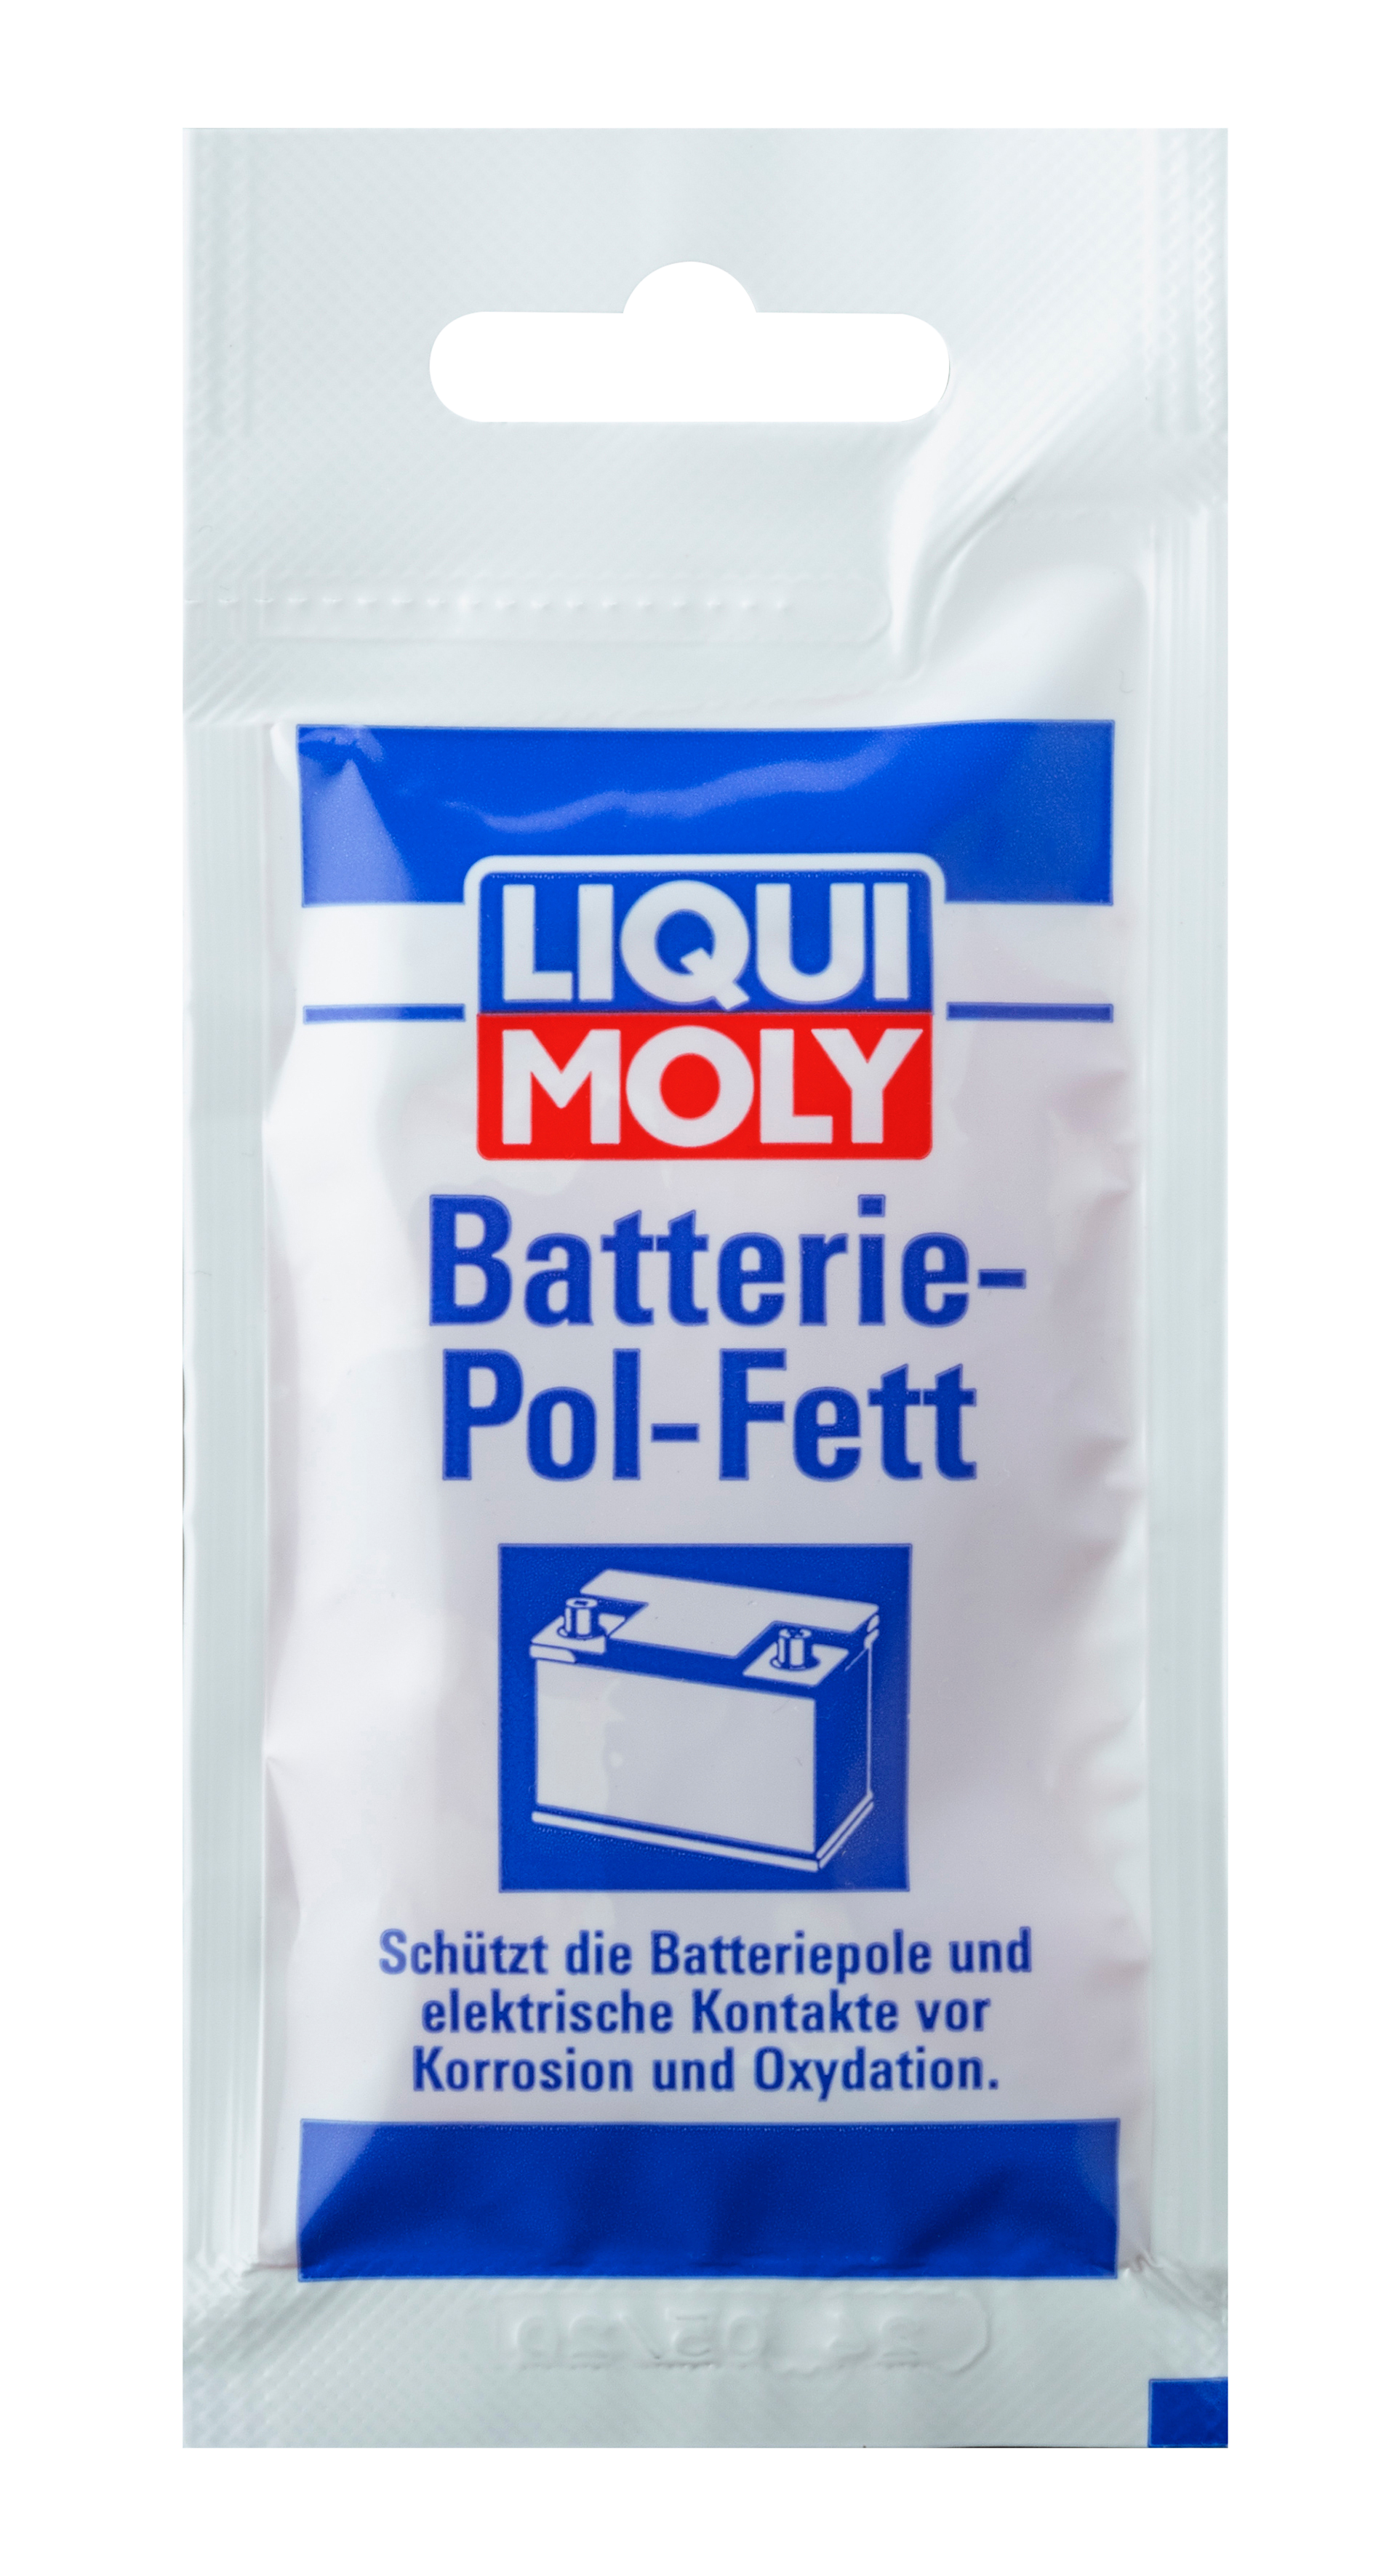 Liqui Moly 3139 Batterie-Pol-Fett 10g Fett Beutel 